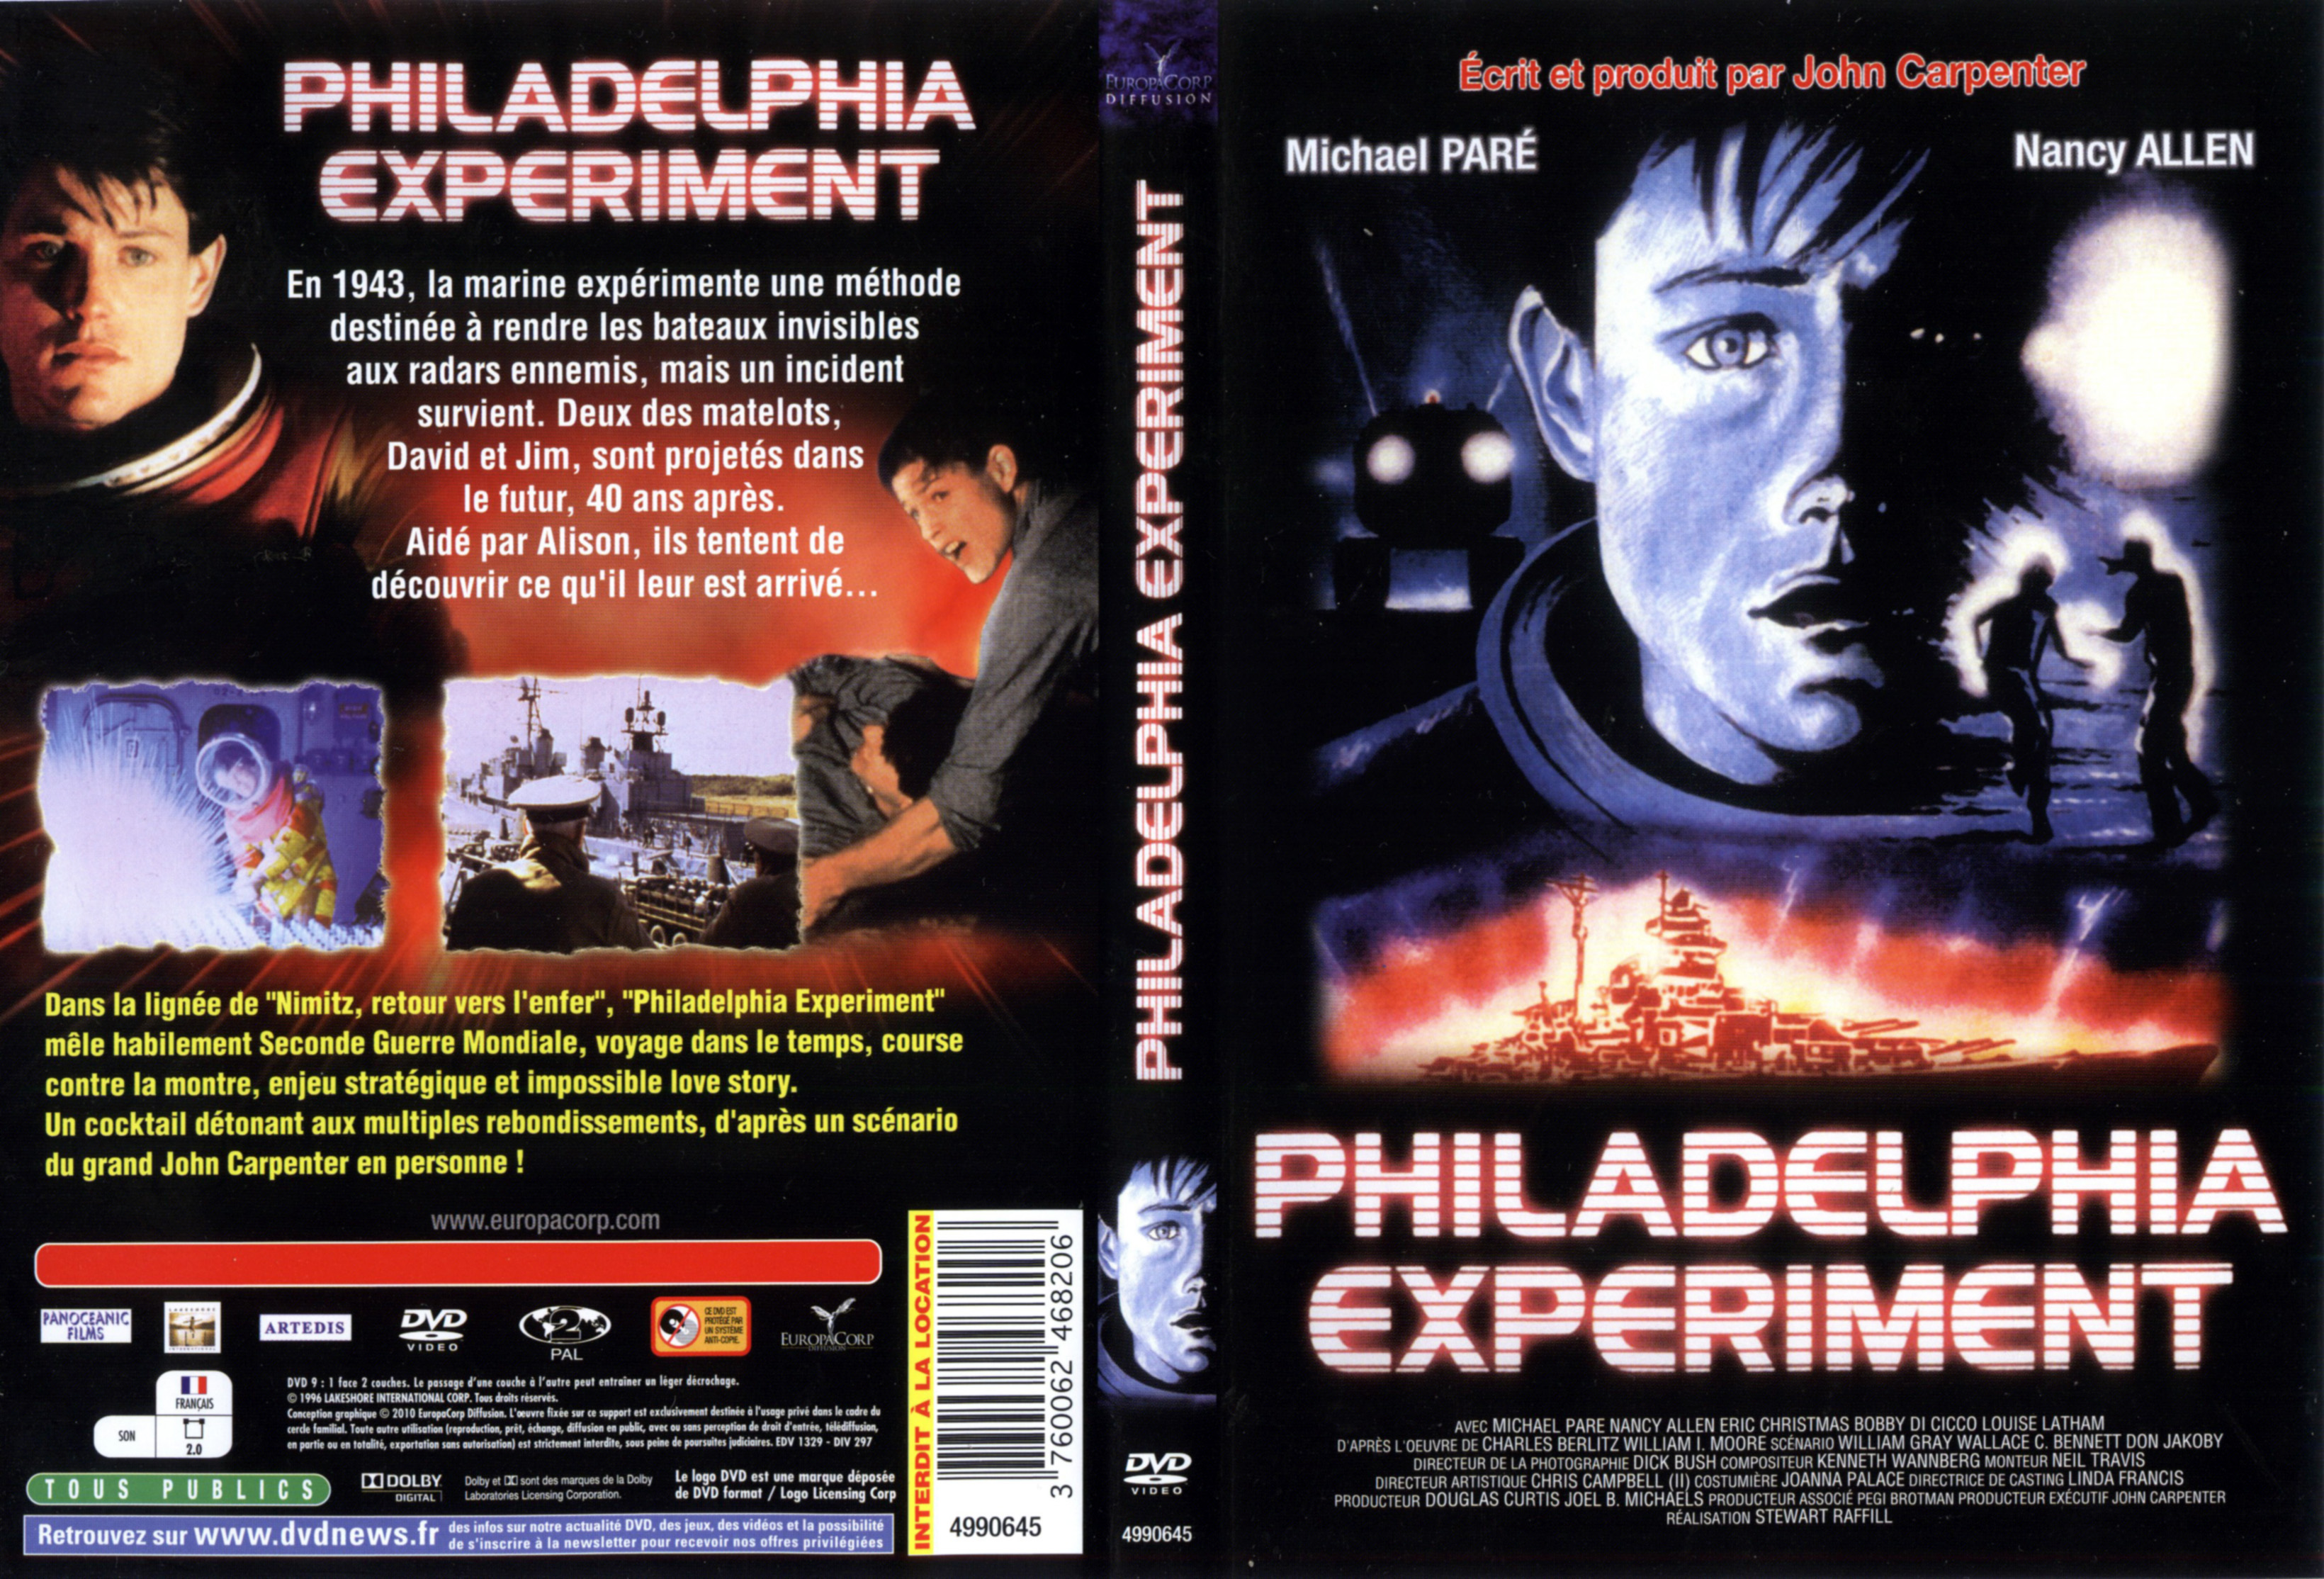 Jaquette DVD Philadelphia experiment v2